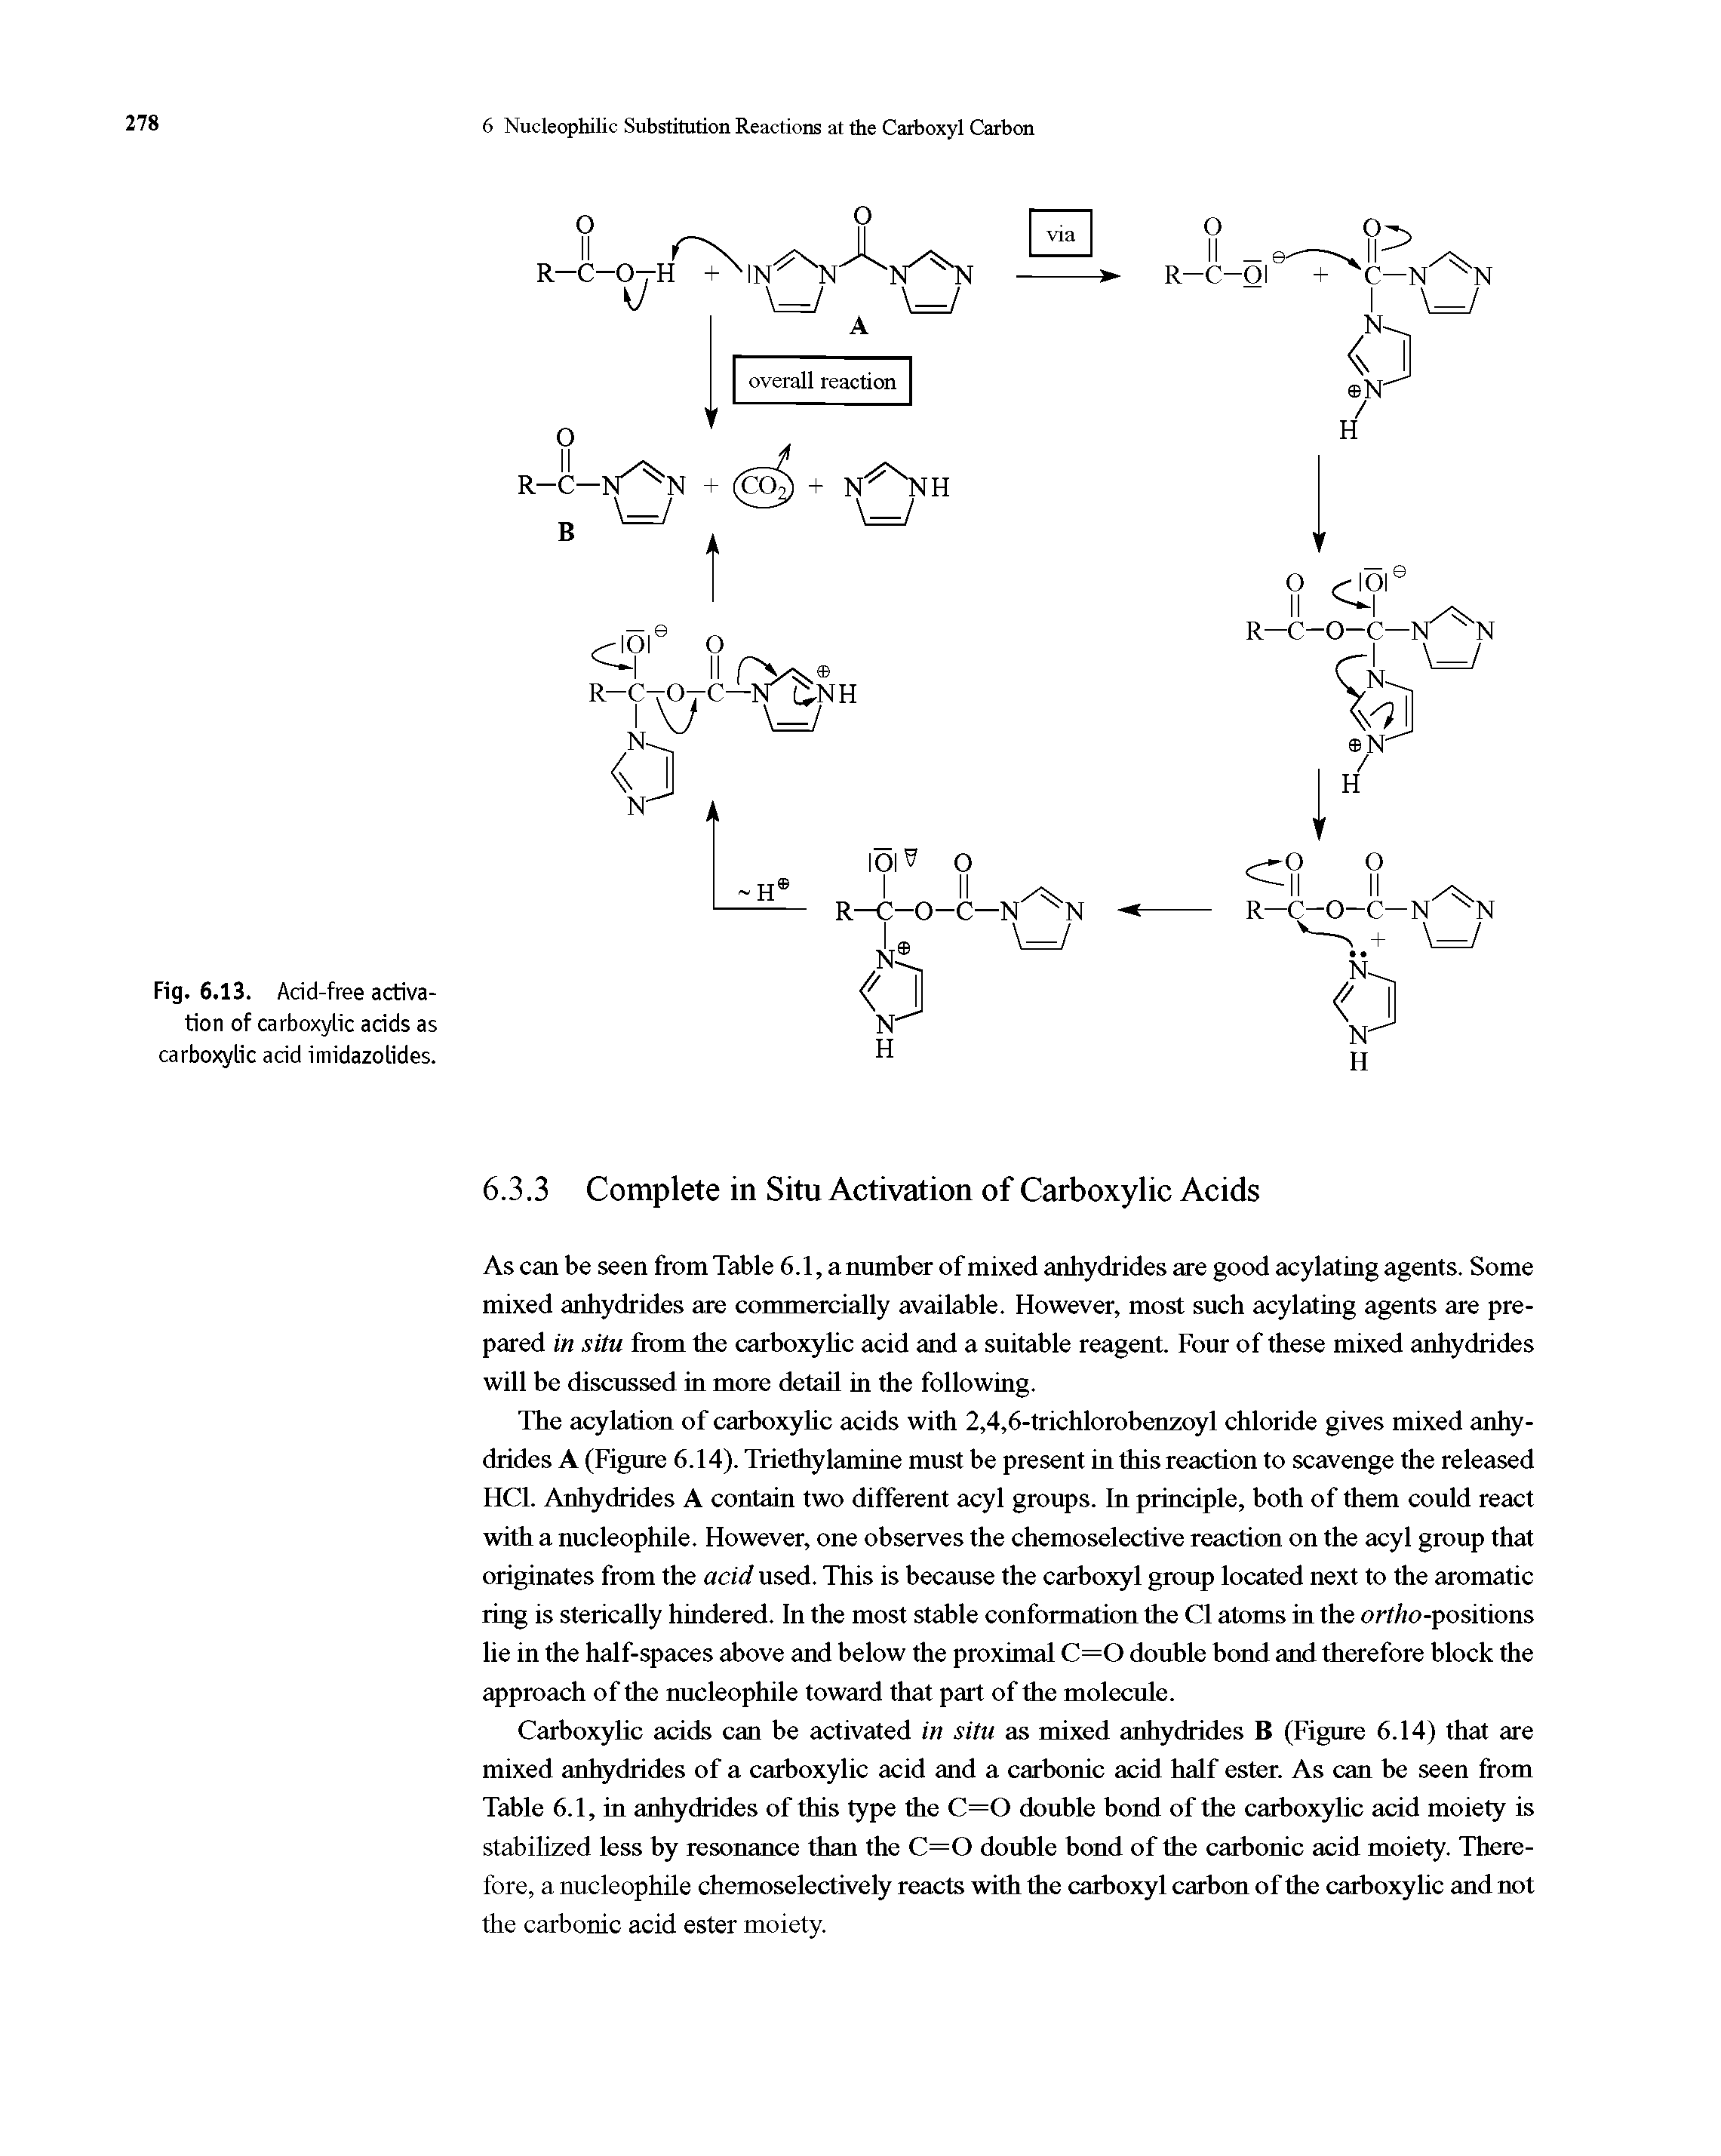 Fig. 6.13. Acid-free activation of carboxylic acids as carboxylic acid imidazolides.